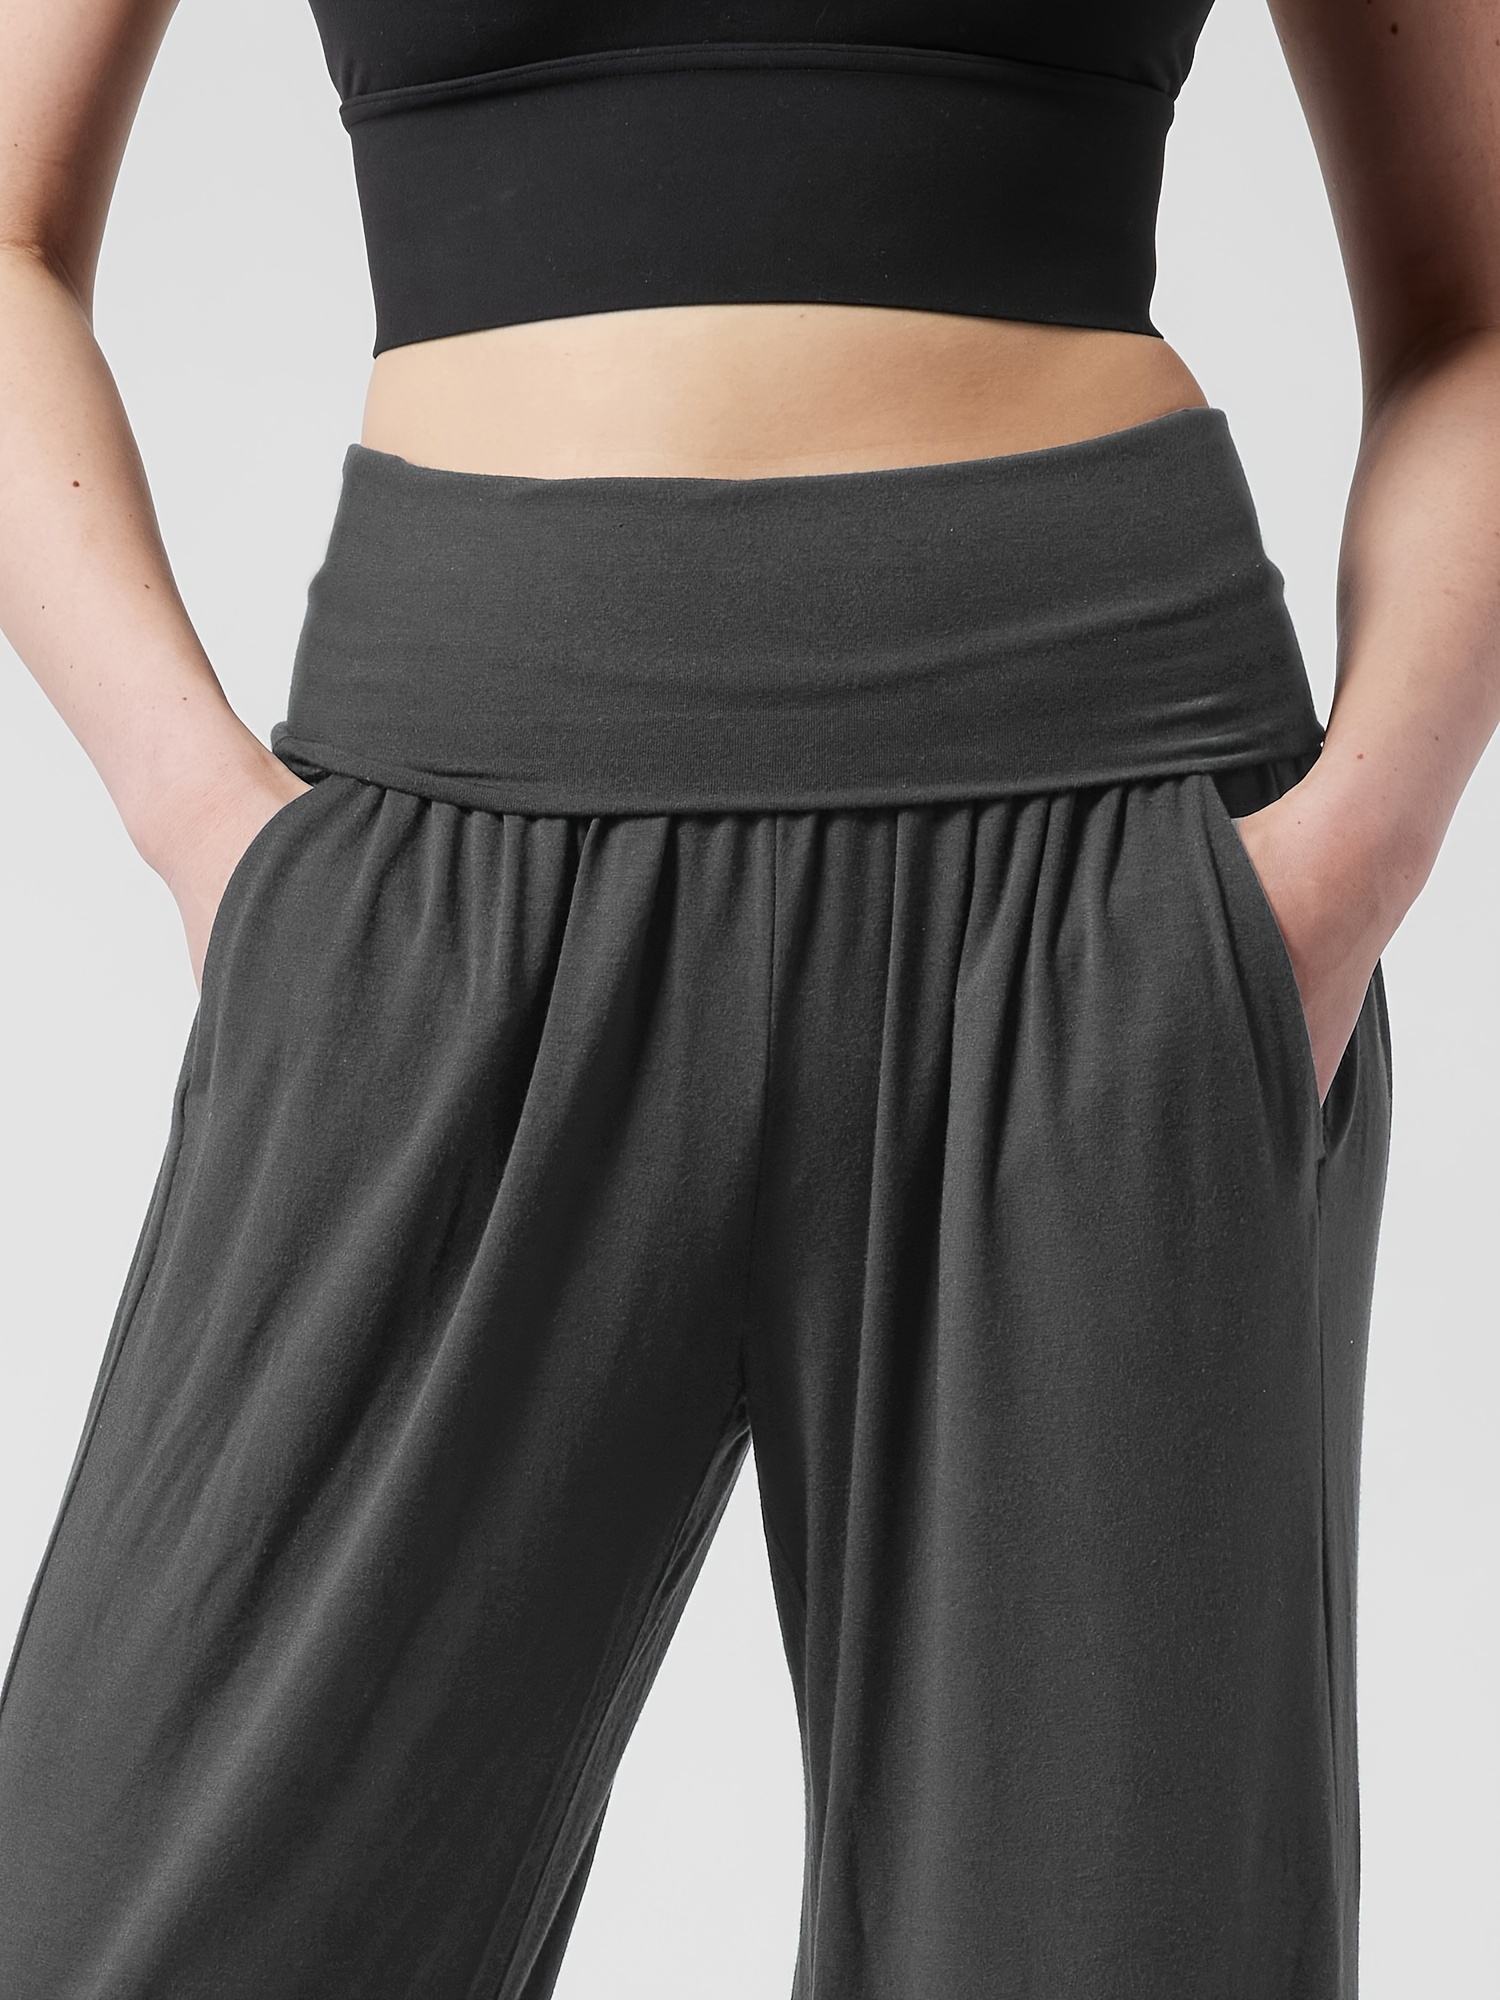 TOWED22 Womens Yoga Pants with Pockets High Waisted Pants Wide Leg